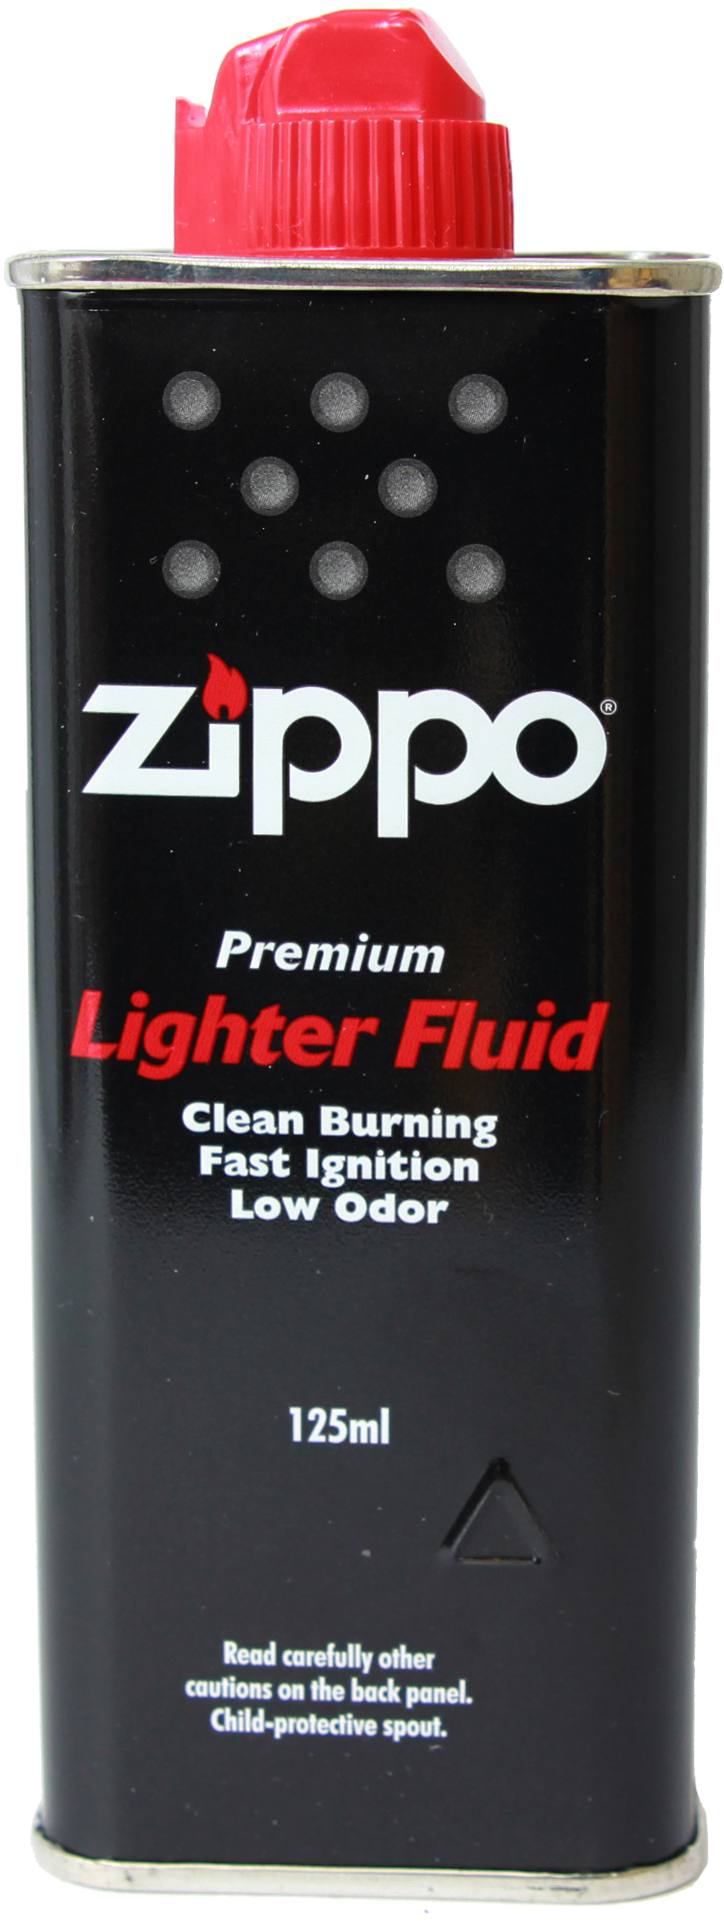 Zippo Premium Light Fluid 125ml